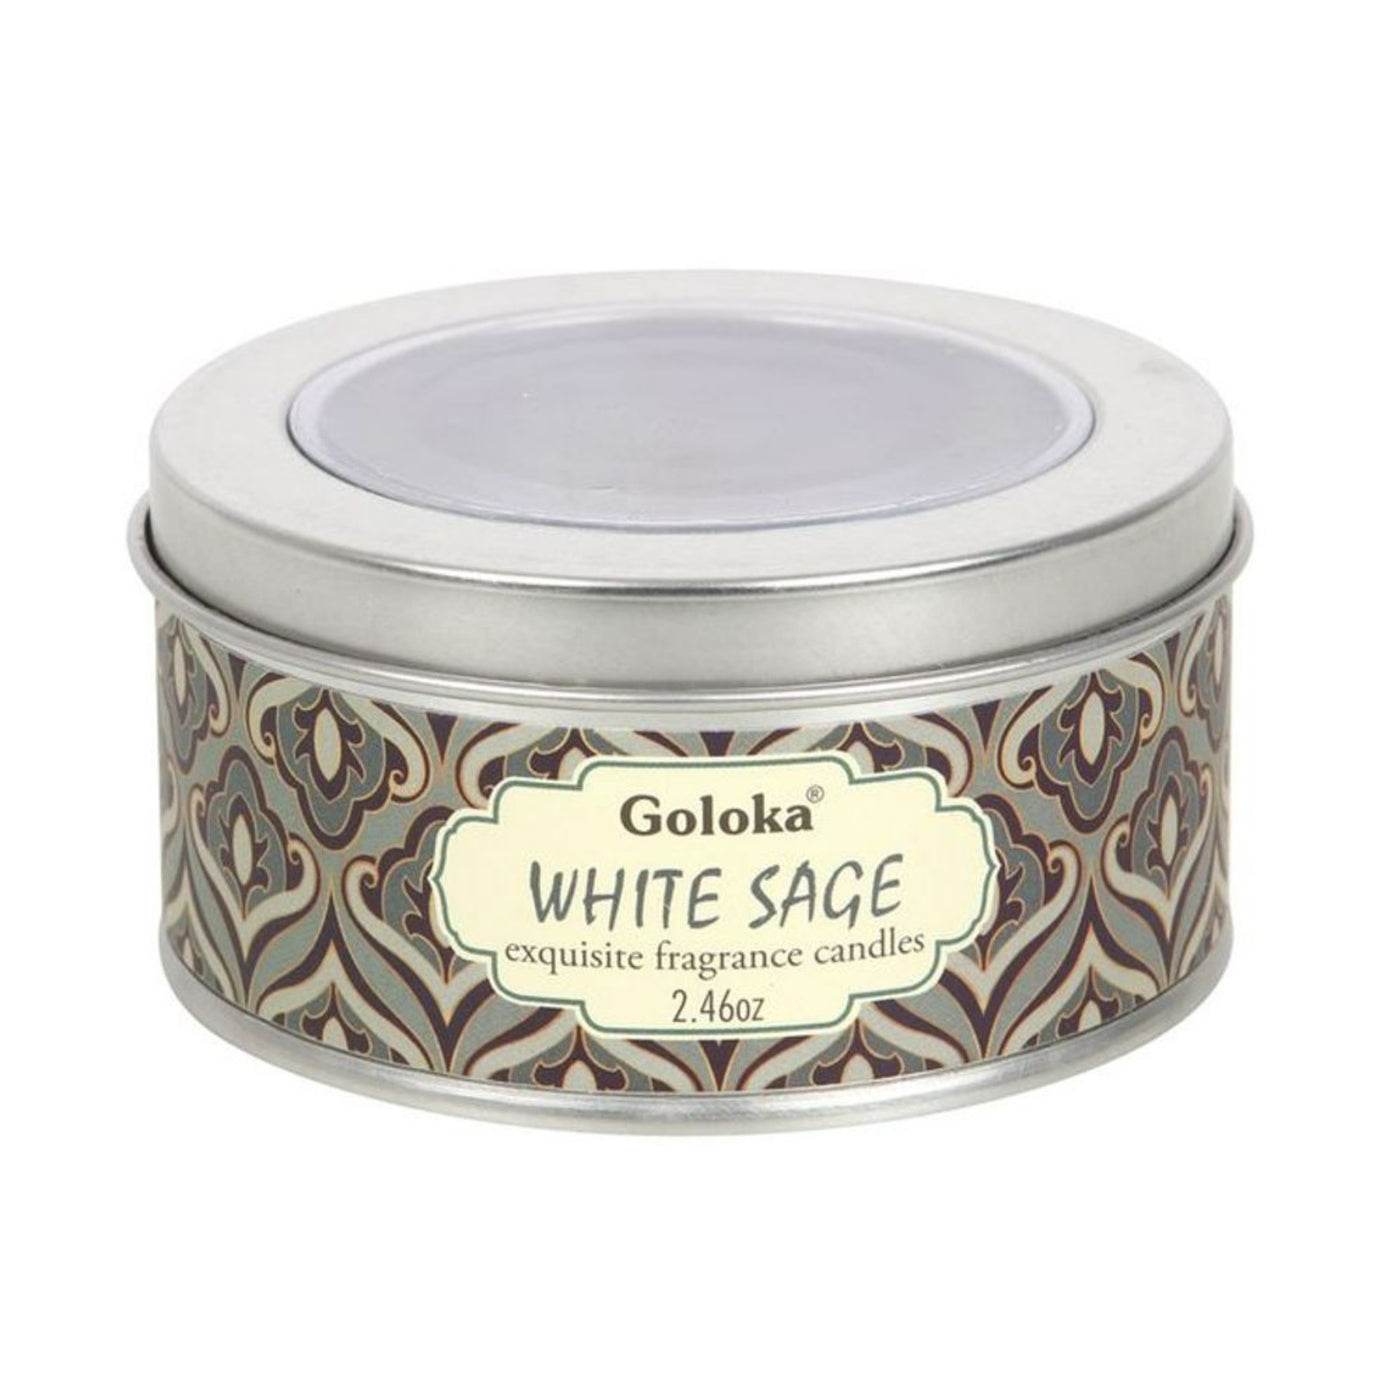 Goloka White Sage Soya Wax Candle In Metal Tin.